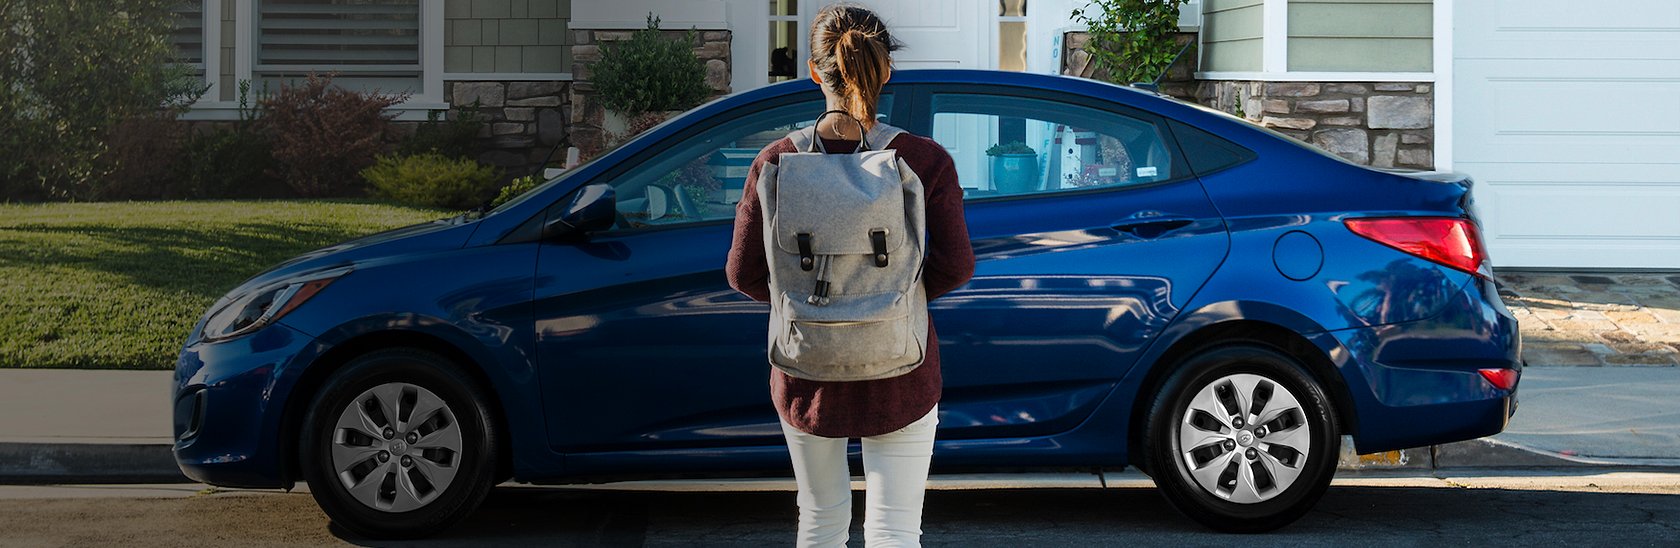 A Student standing next to a Hyundai car